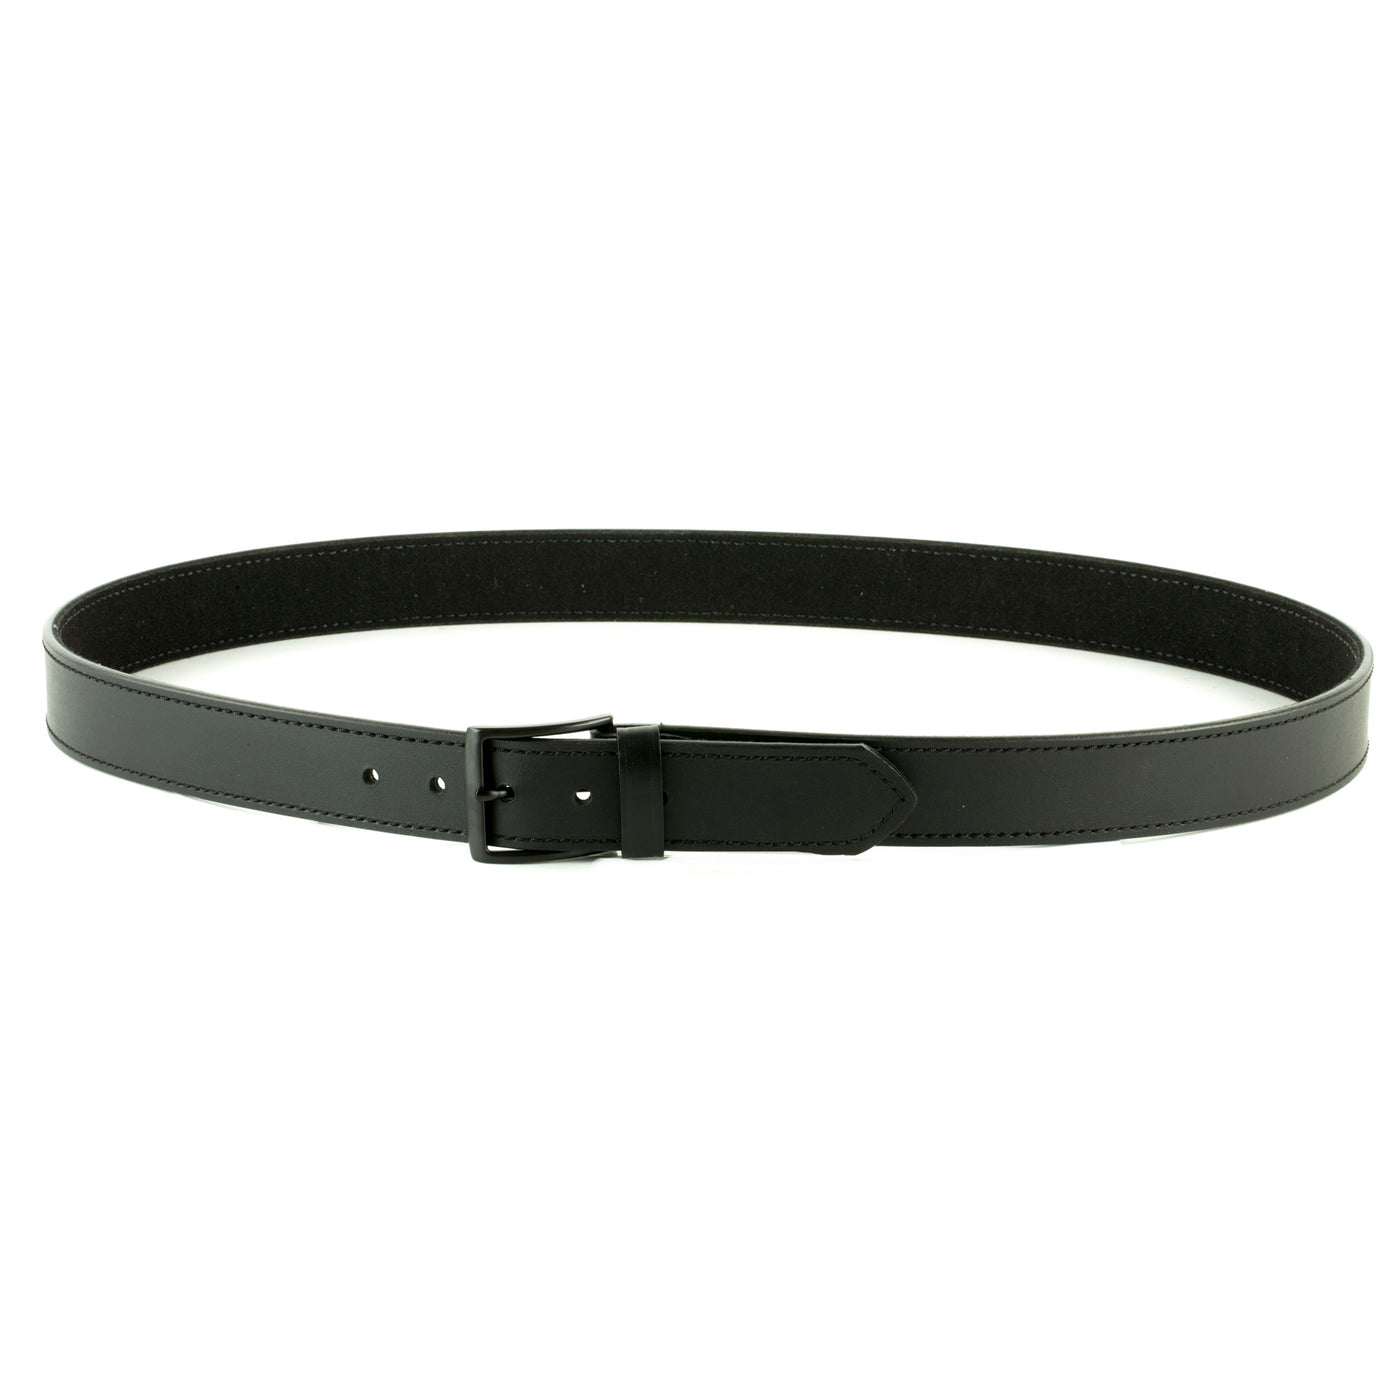 DeSantis 1.5 inch Everyday Carry Belt-Size